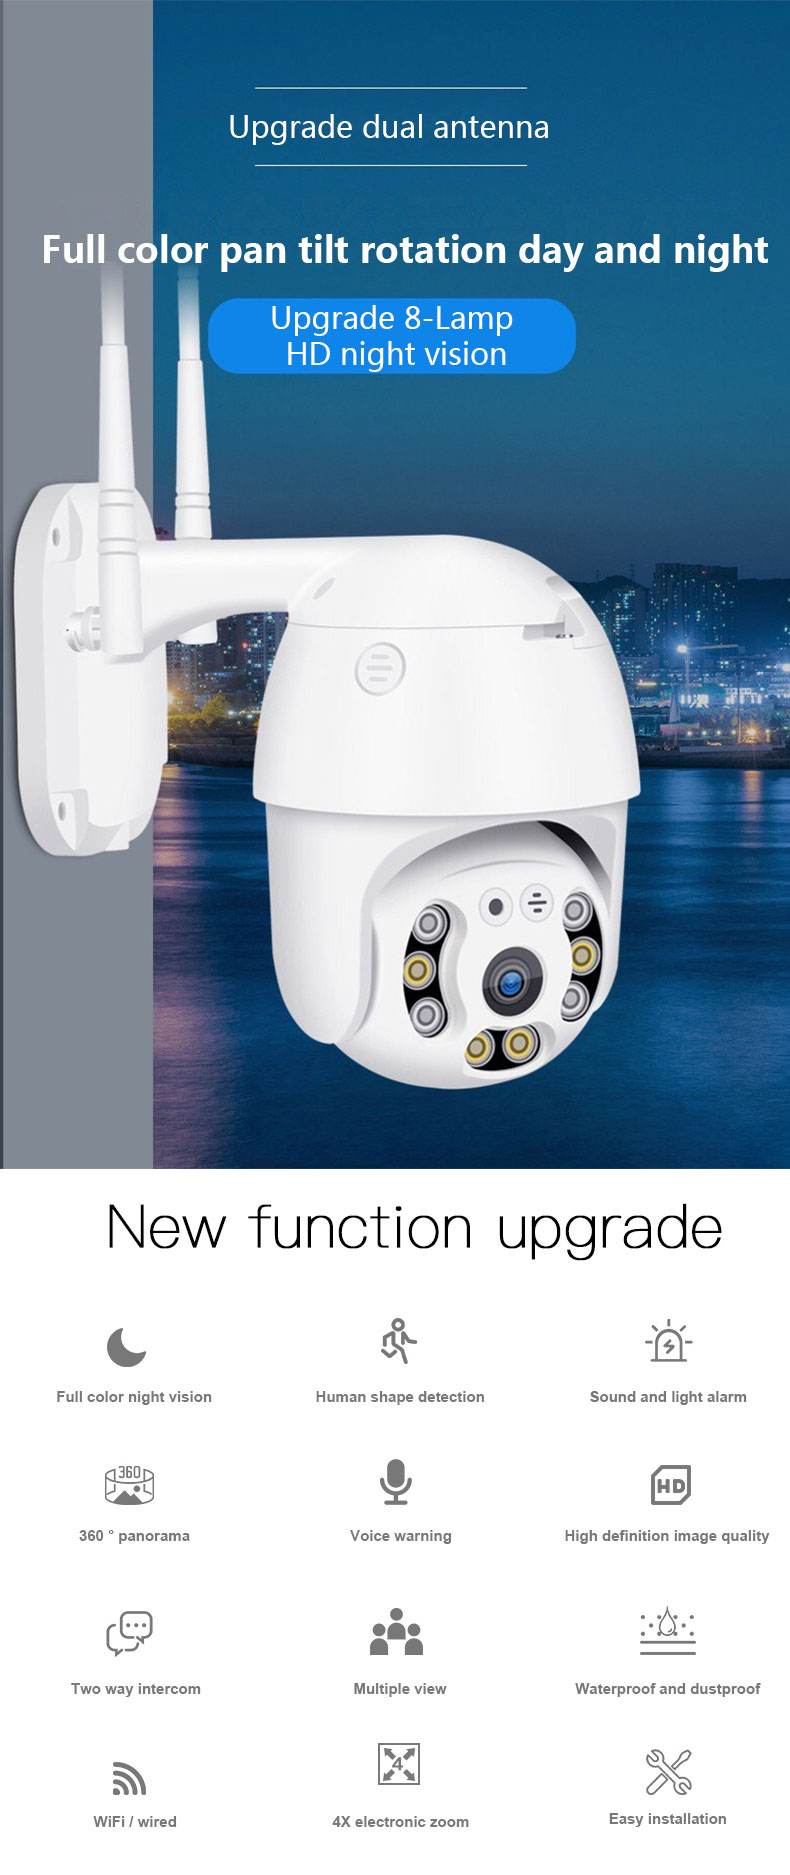 CCTV Smart Home POE IP Camera, 1080P 2MP Resolution, Pan Tilt, Outdoor Weatherproof, Two way Audio instant photo film camera for